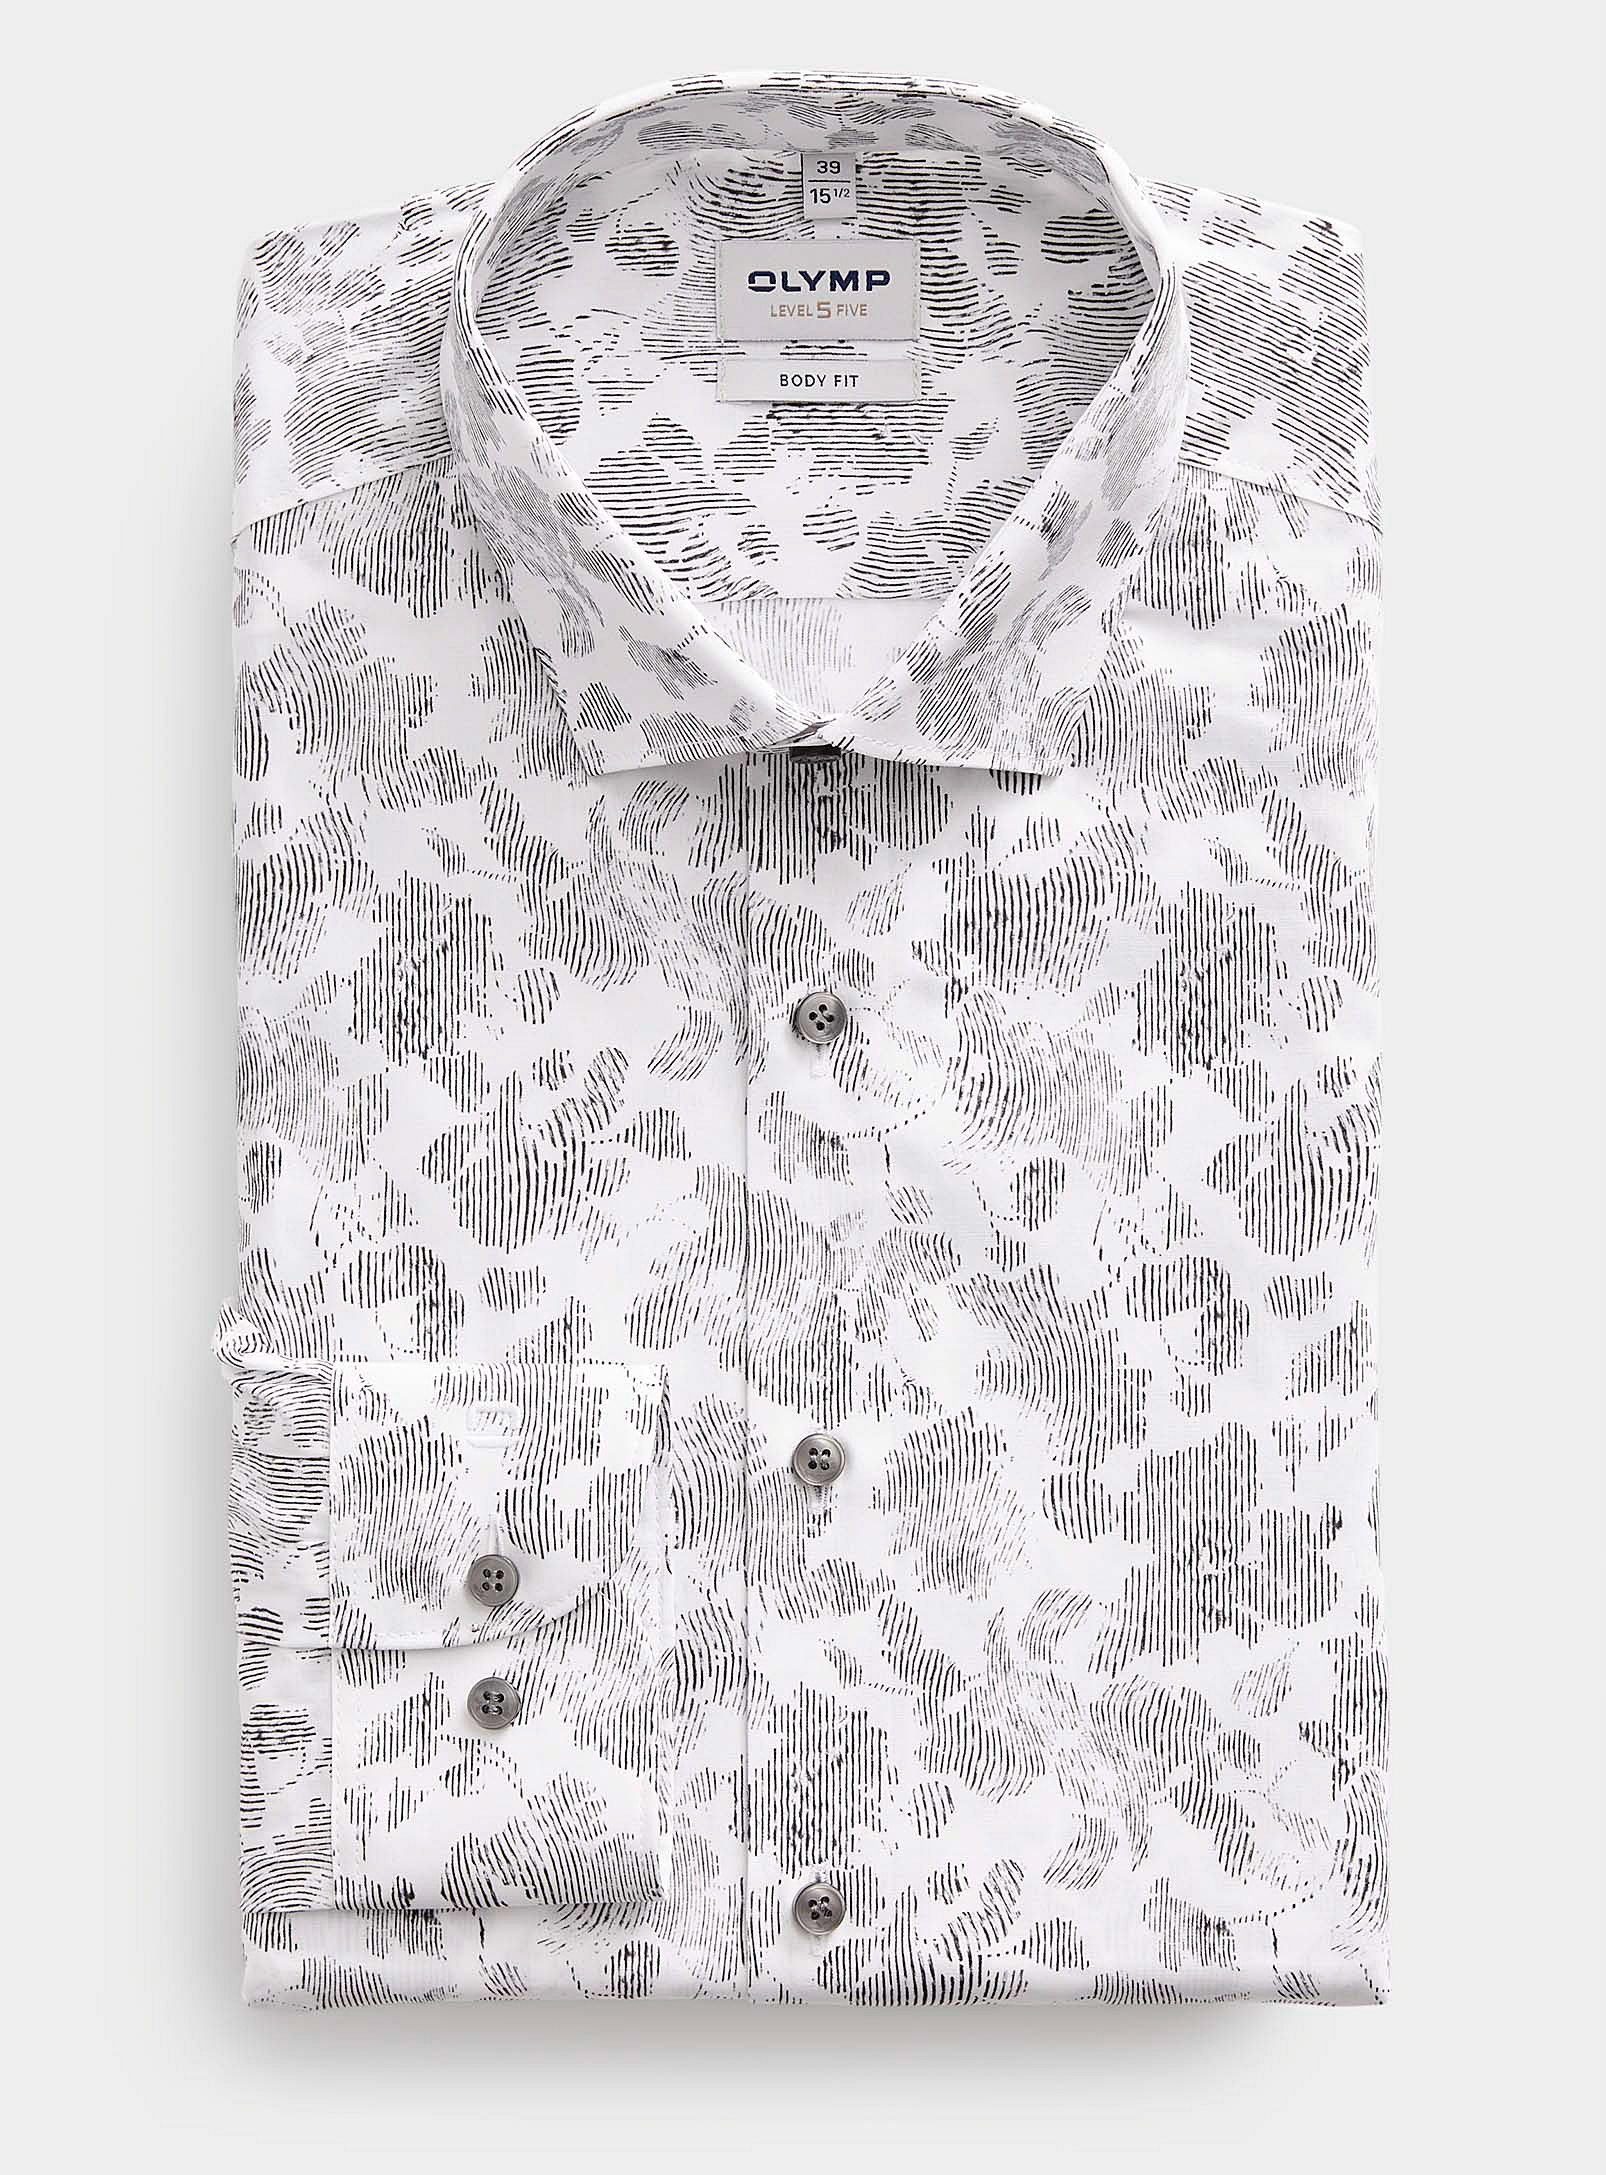 Olymp - Men's Floral print shirt Modern fit